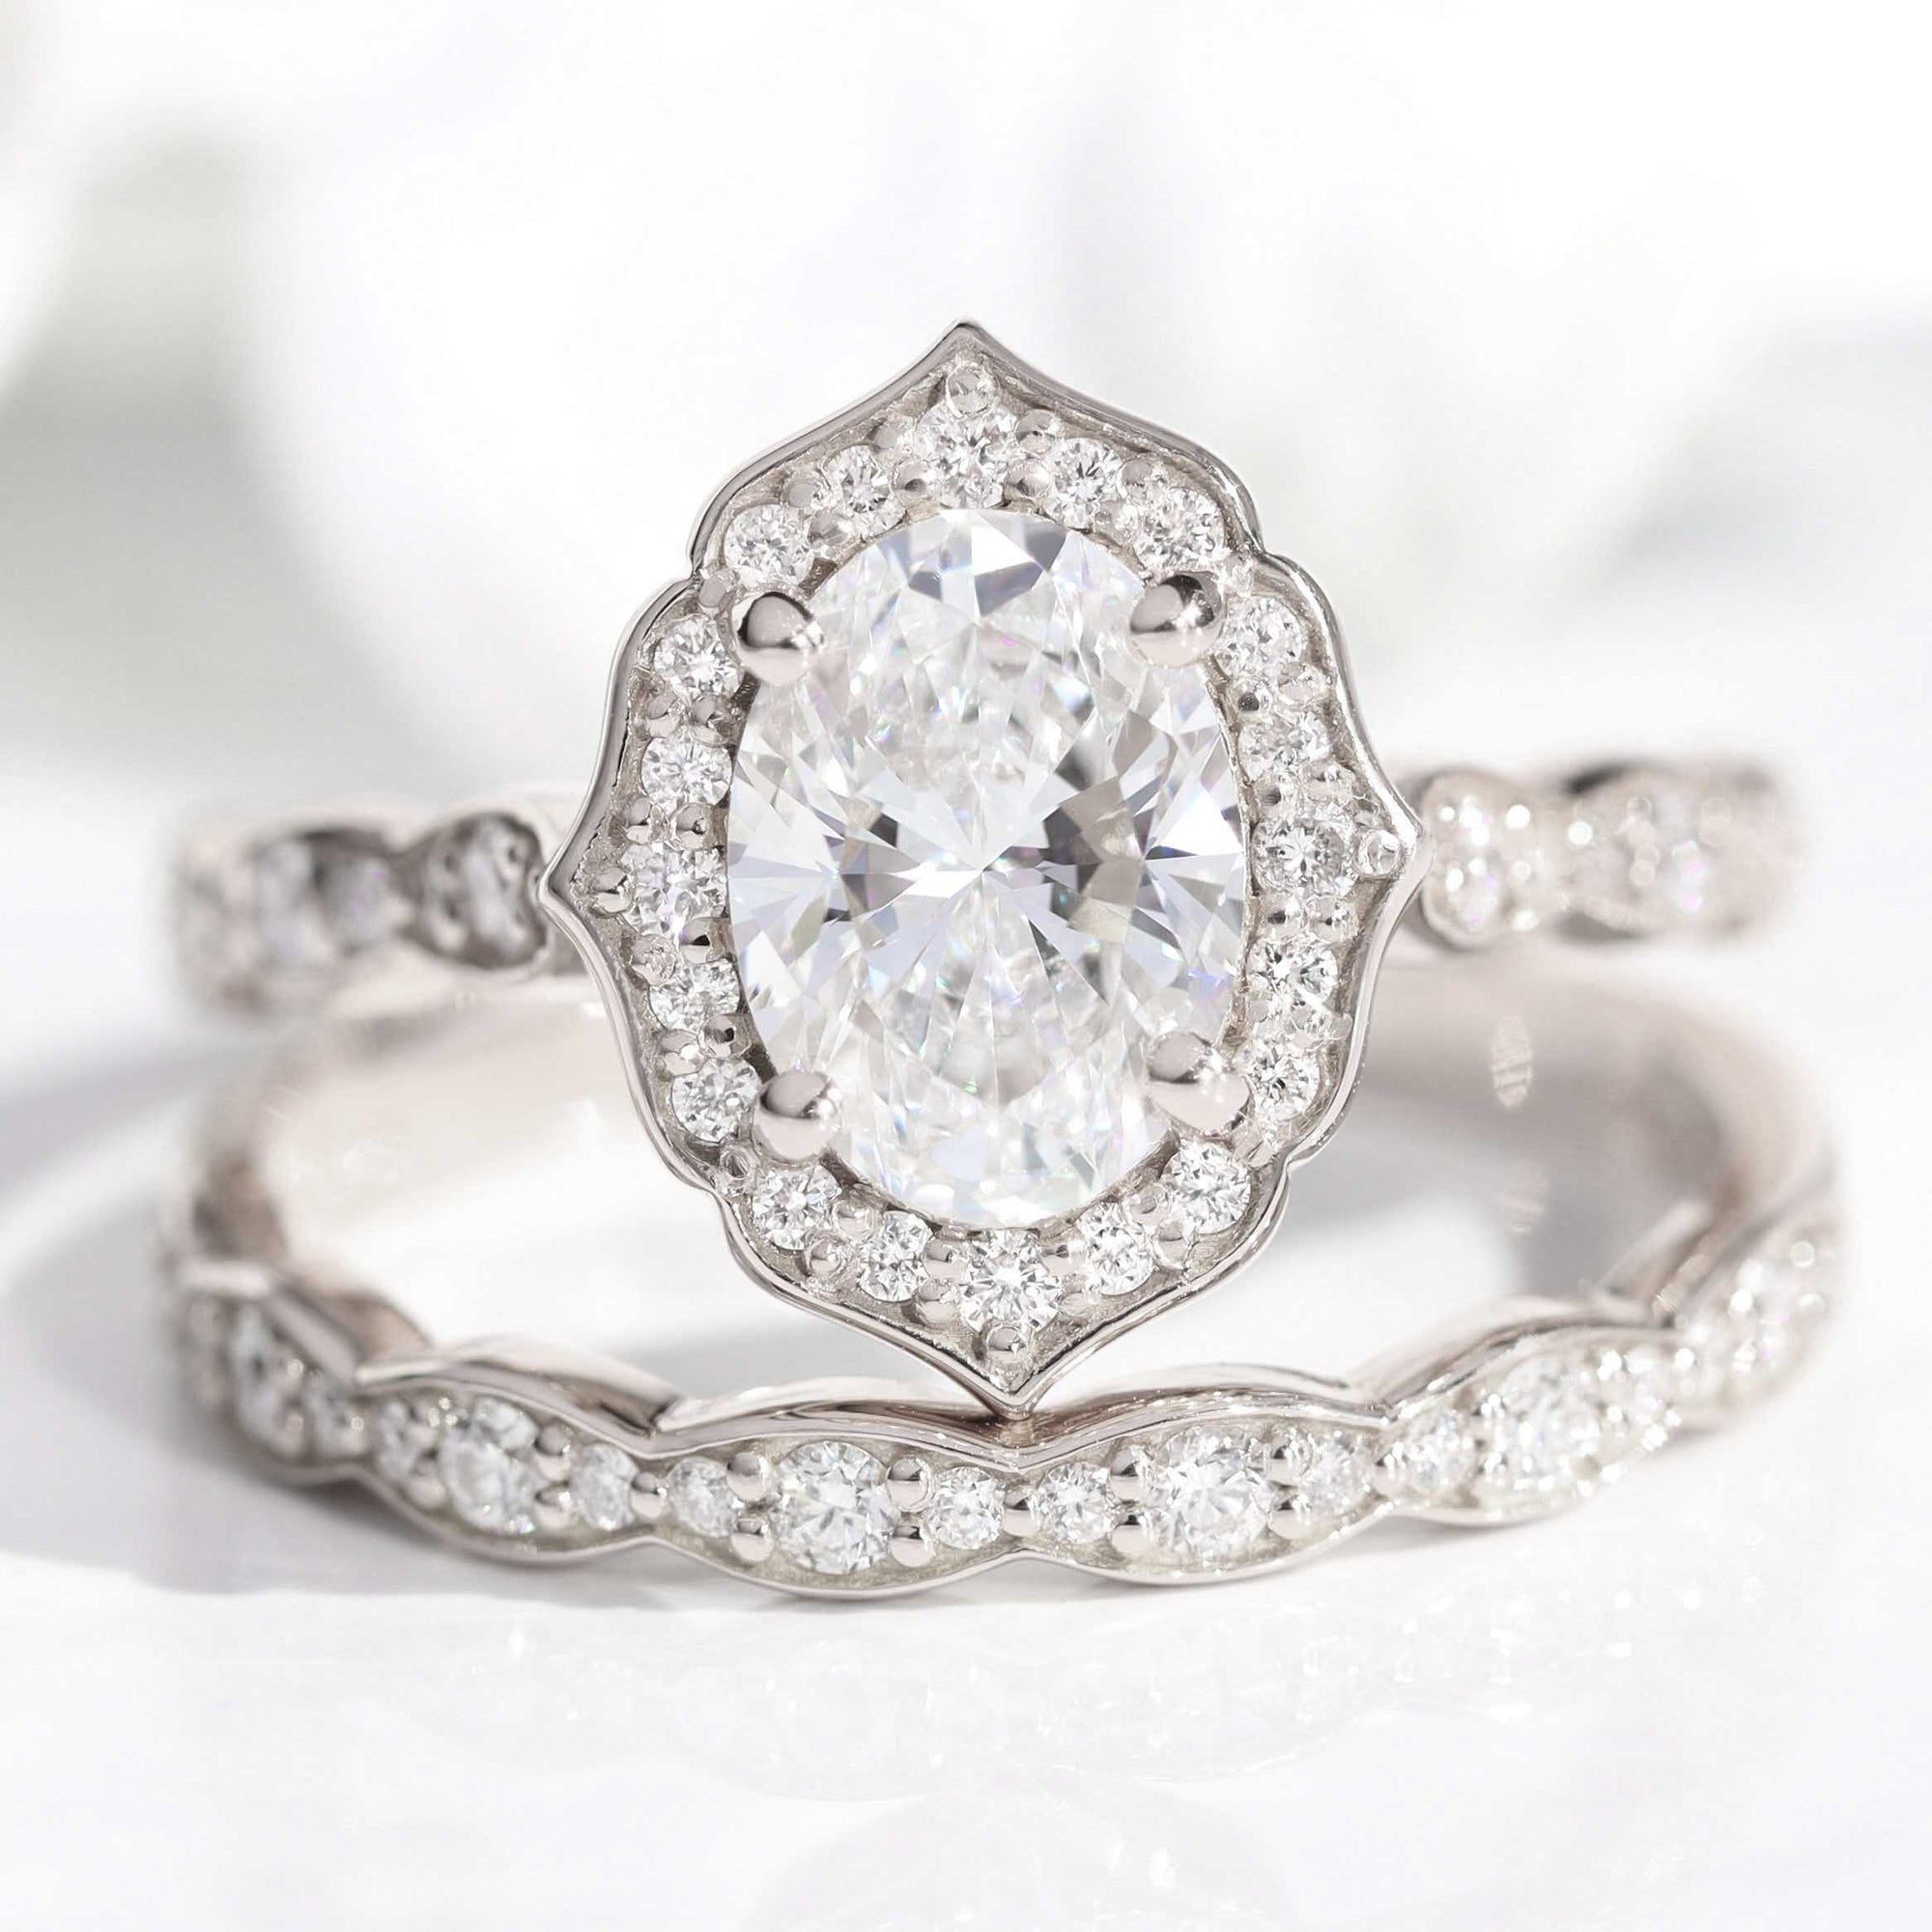 lab diamond ring stack white gold vintage halo oval diamond engagement ring set La More Design Jewelry